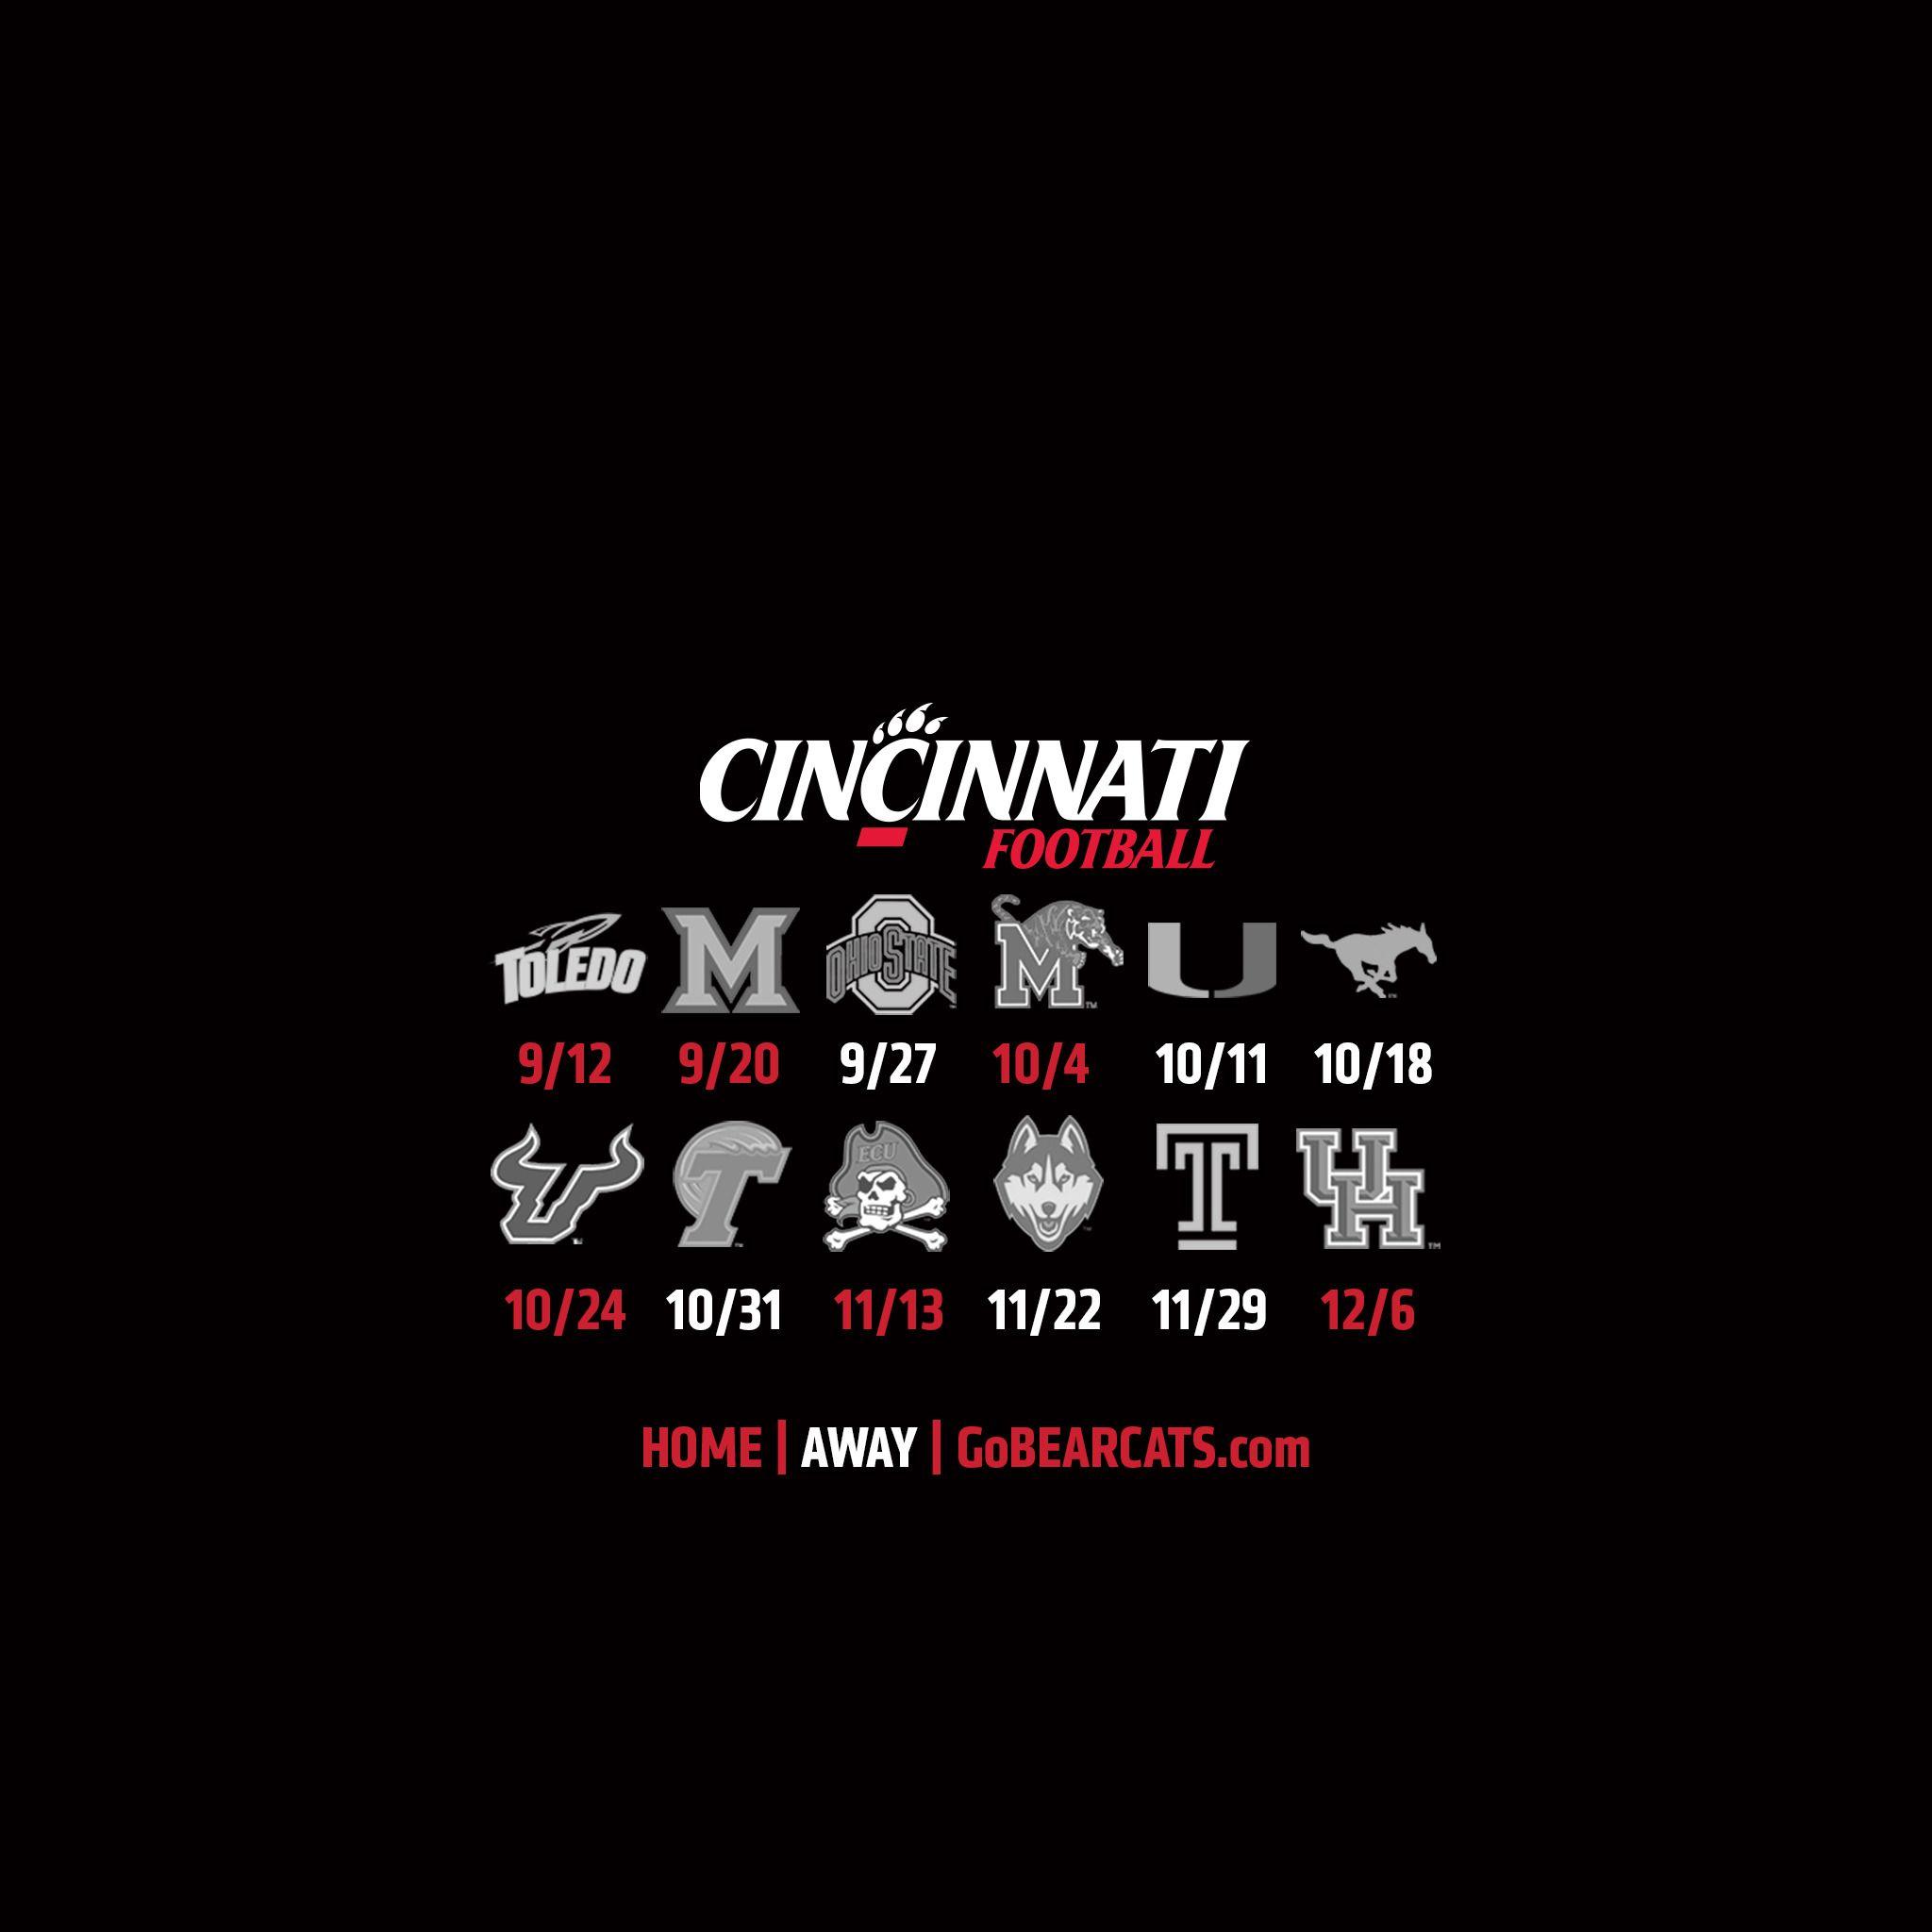 GoBEARCATS.COM Of Cincinnati Official Athletic Site